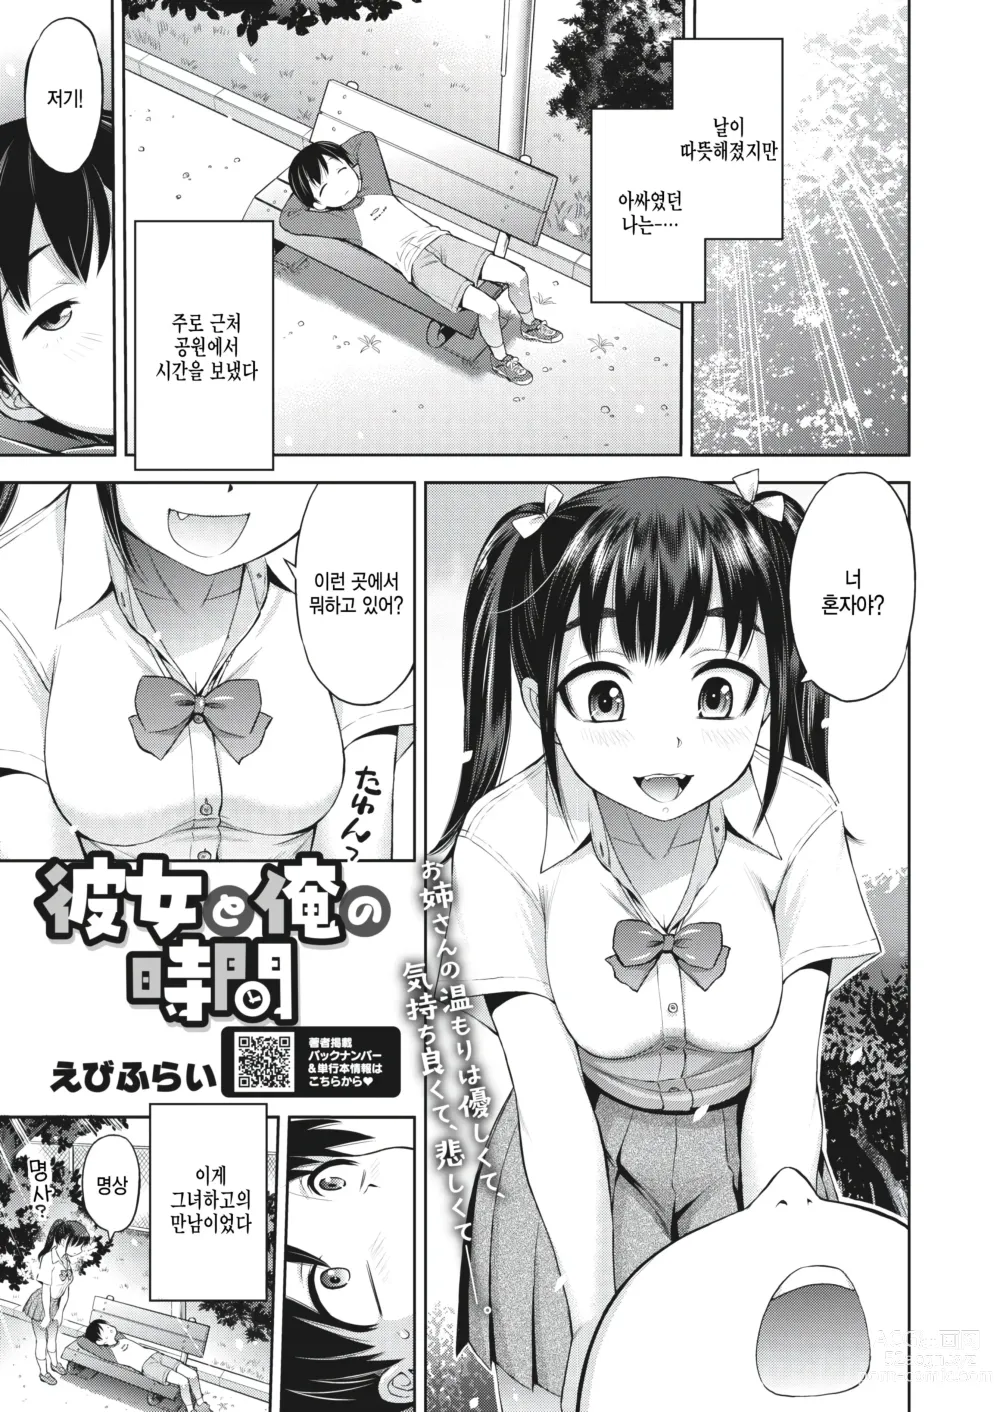 Page 1 of manga Kanojo to Ore no Jikan